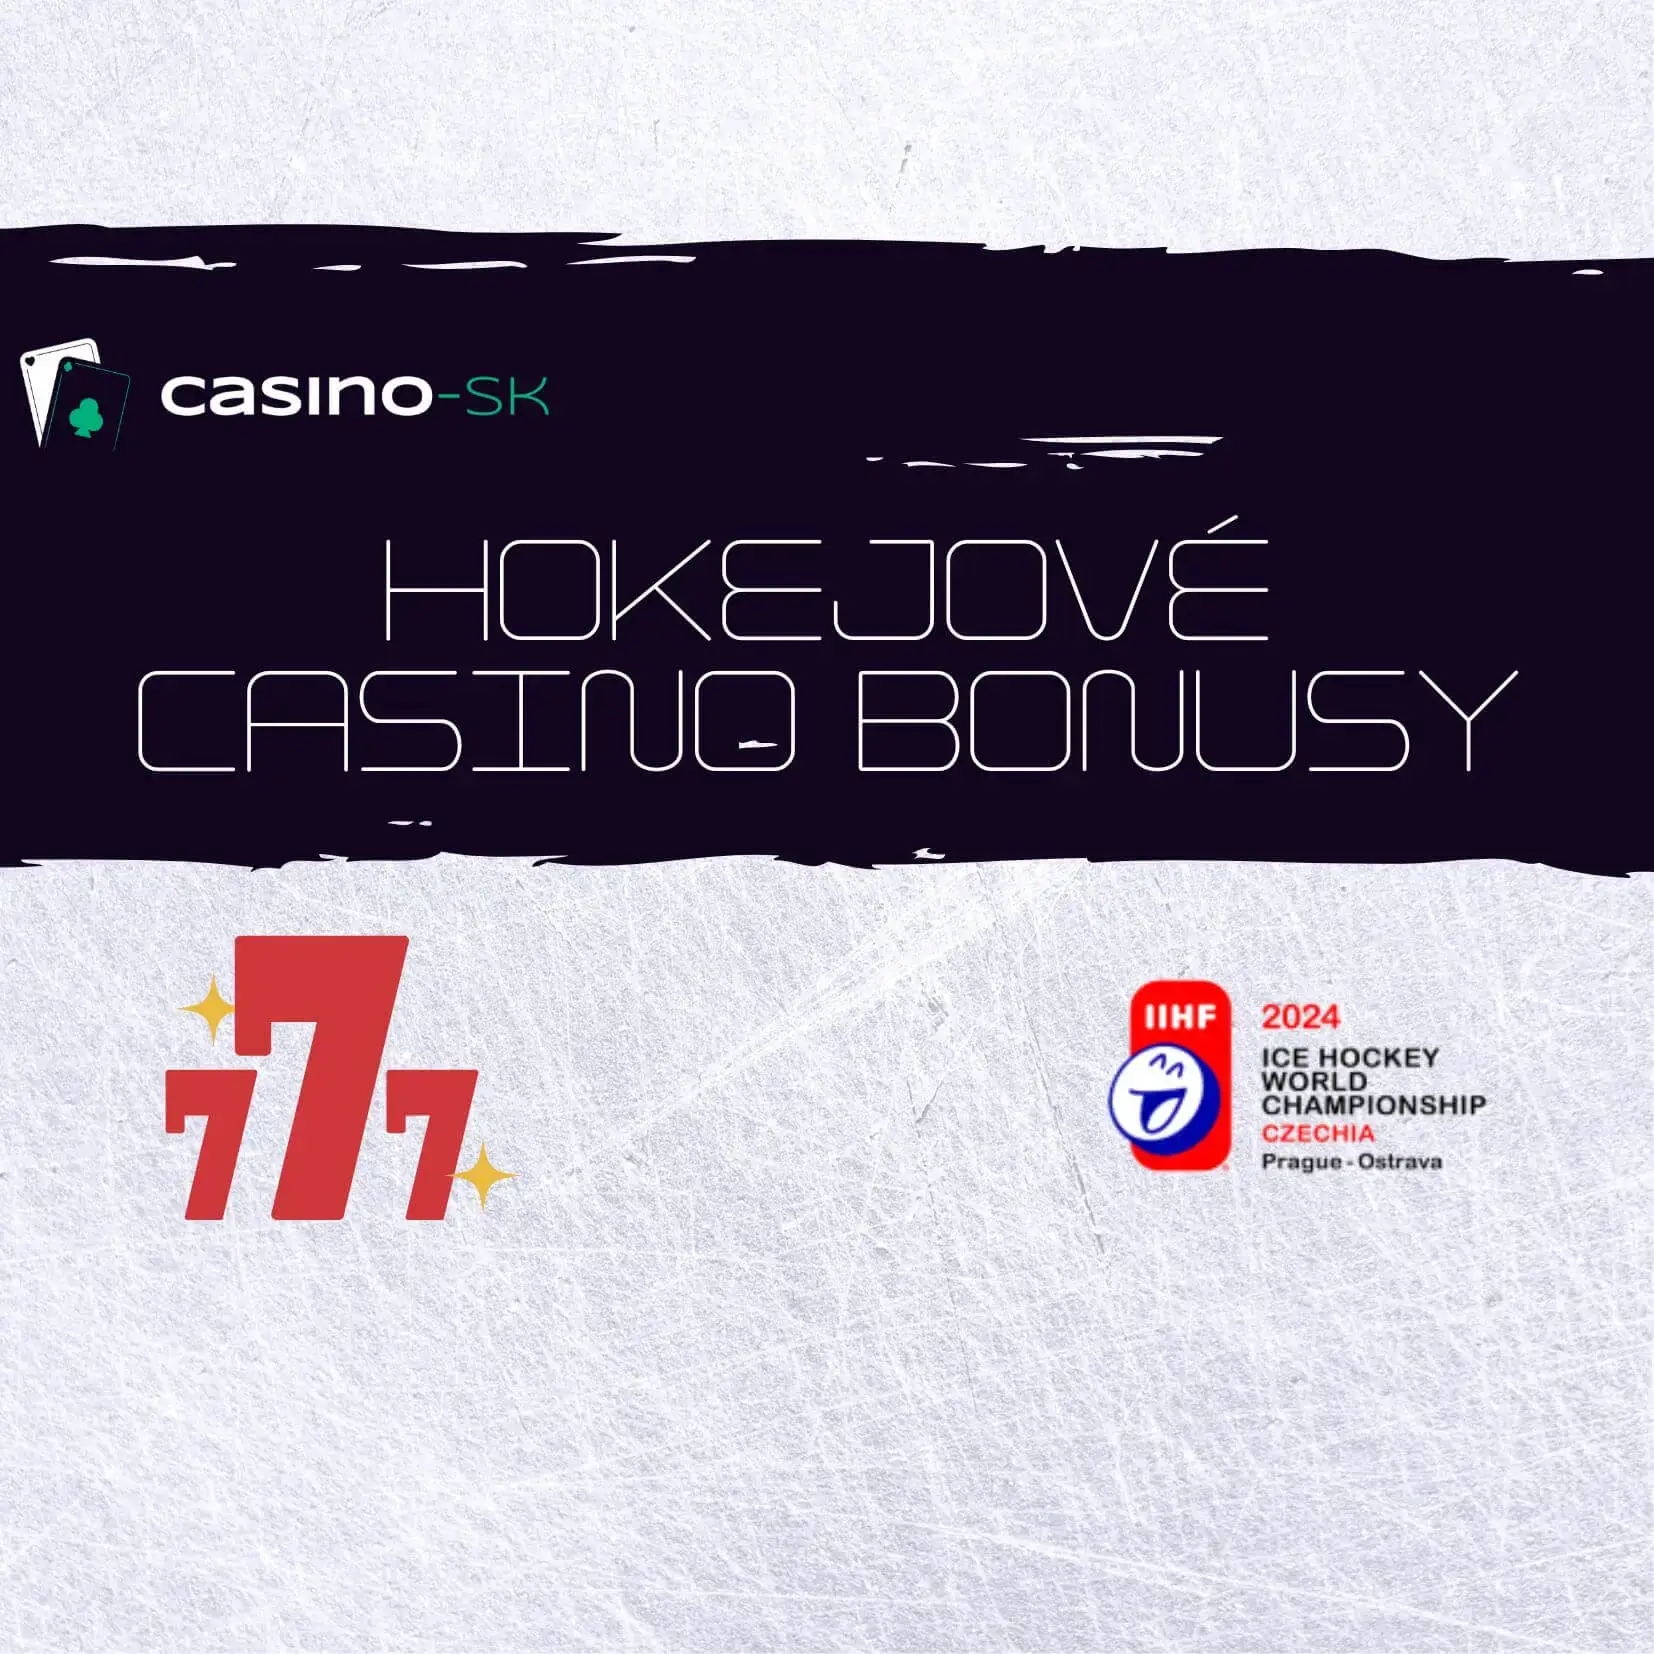 Hokejové casino bonusy k MS 2024